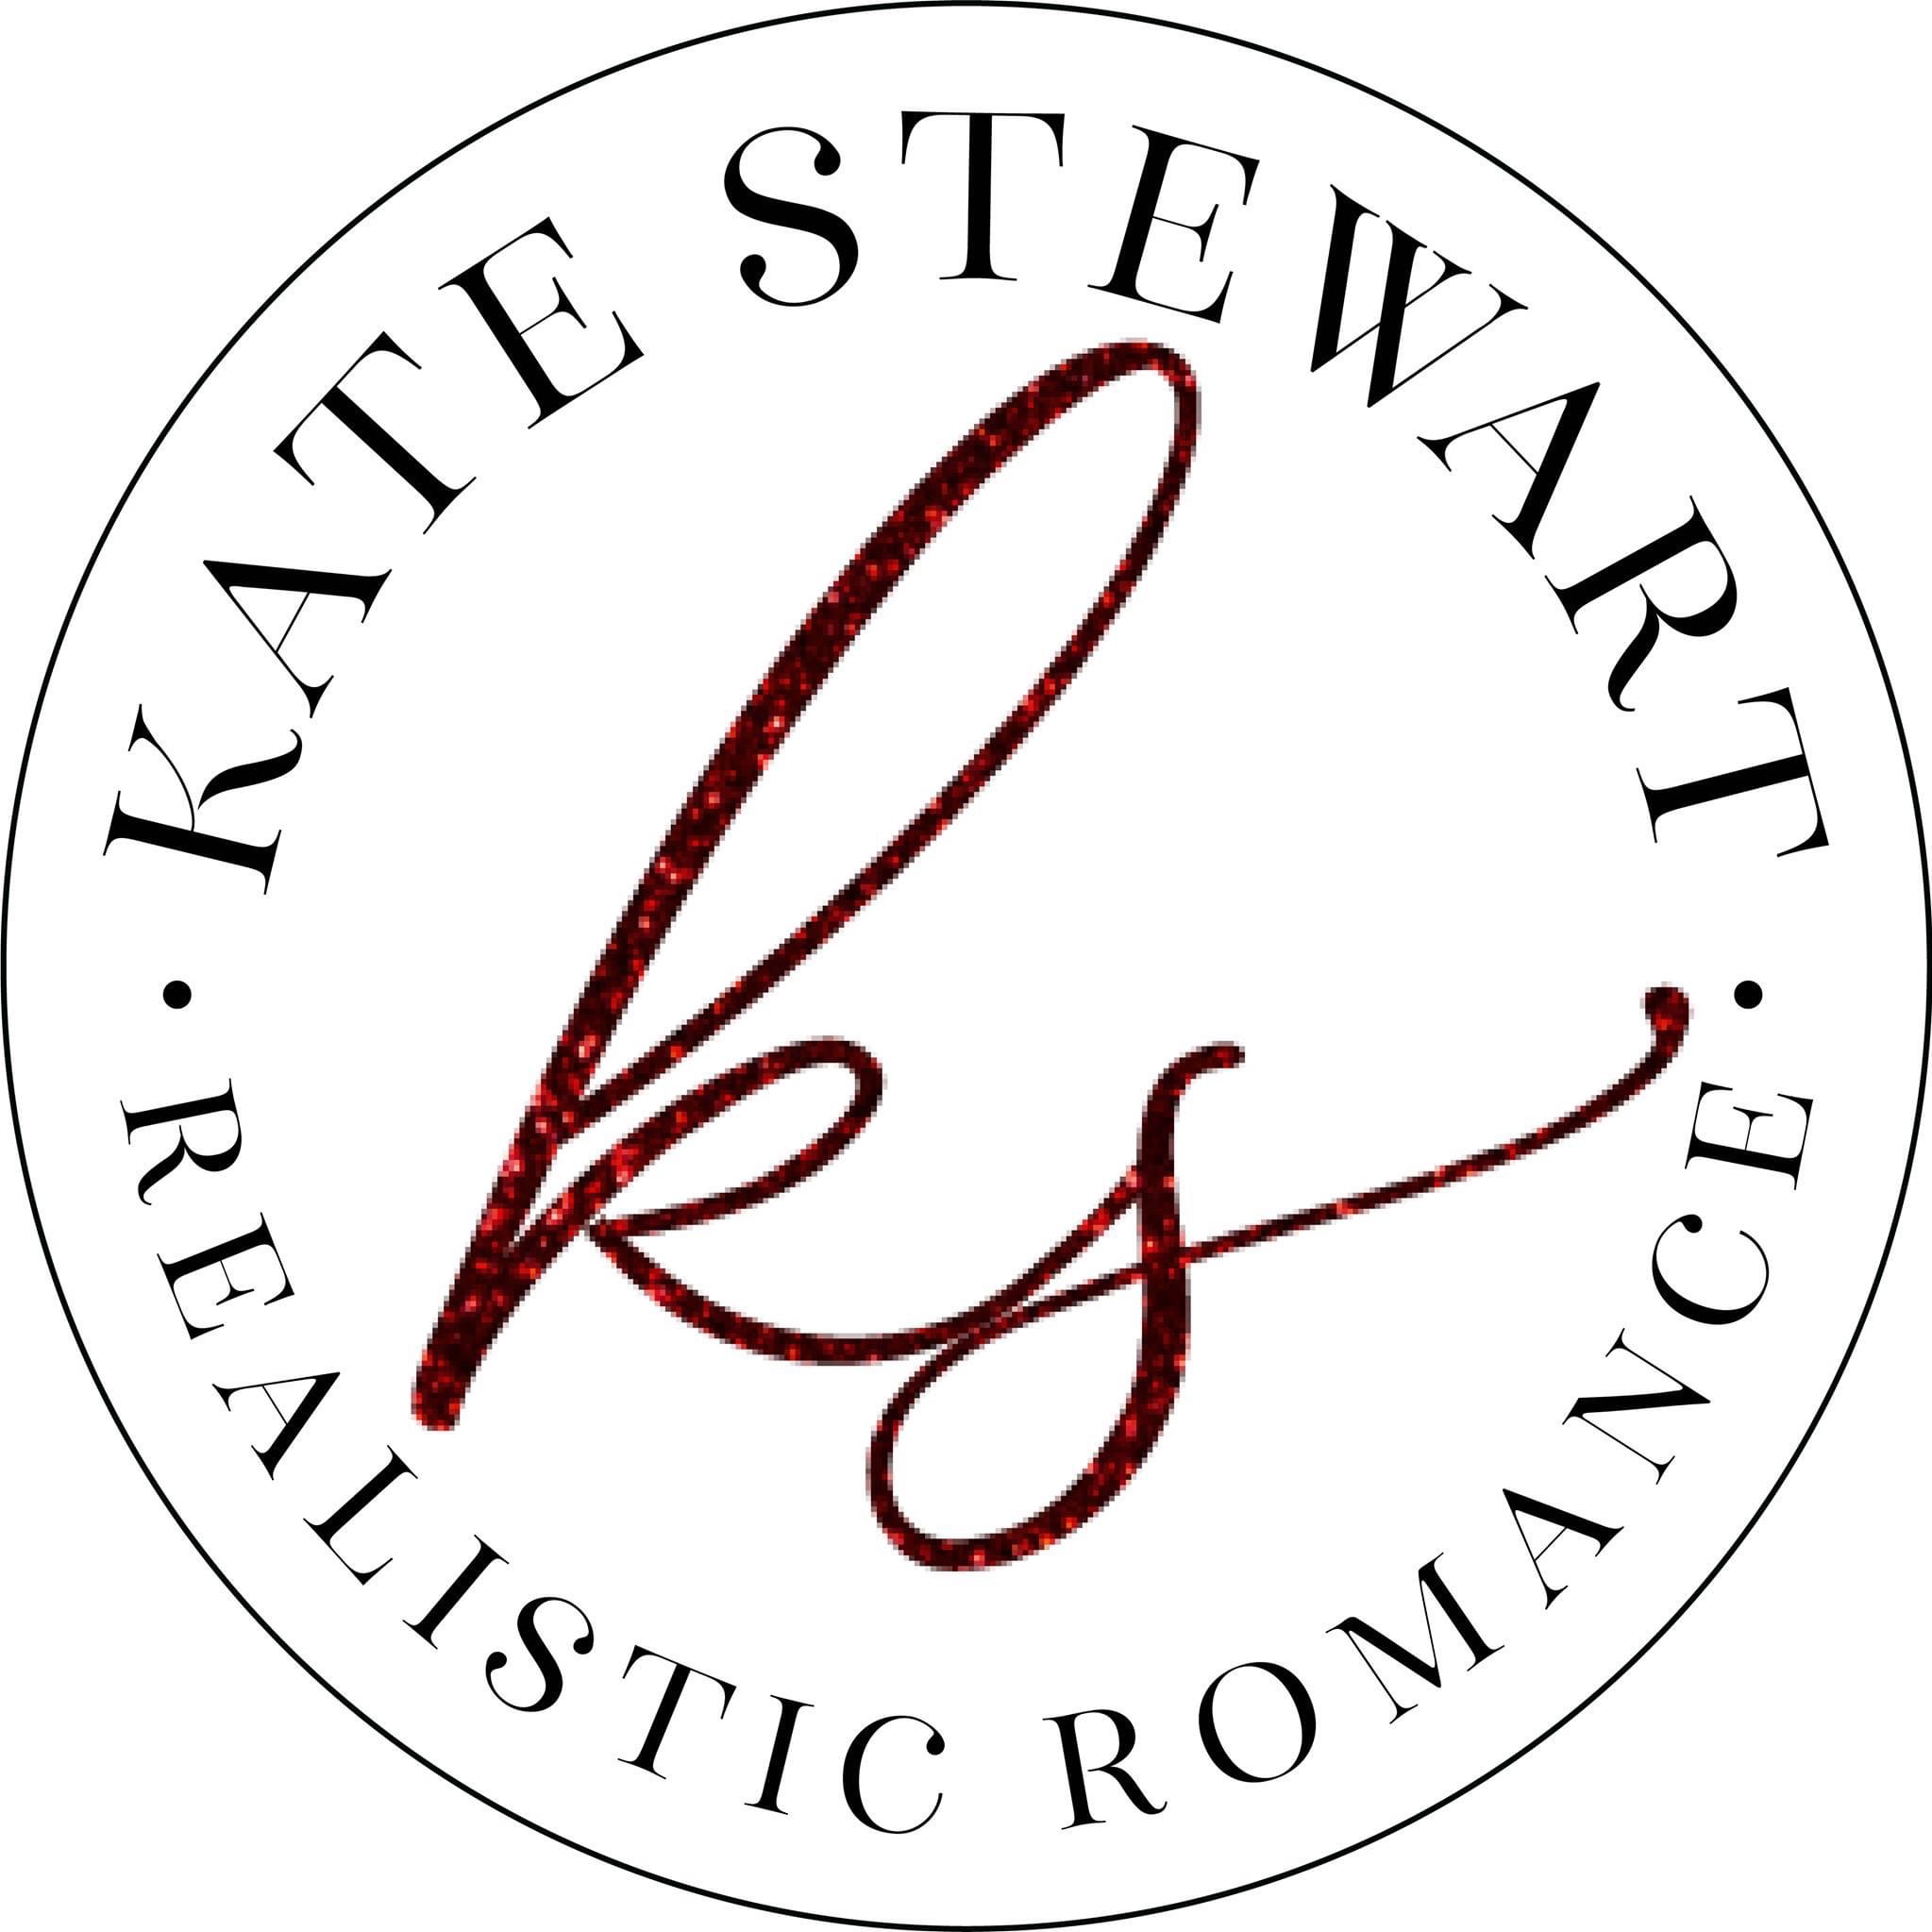 Kate Stewart